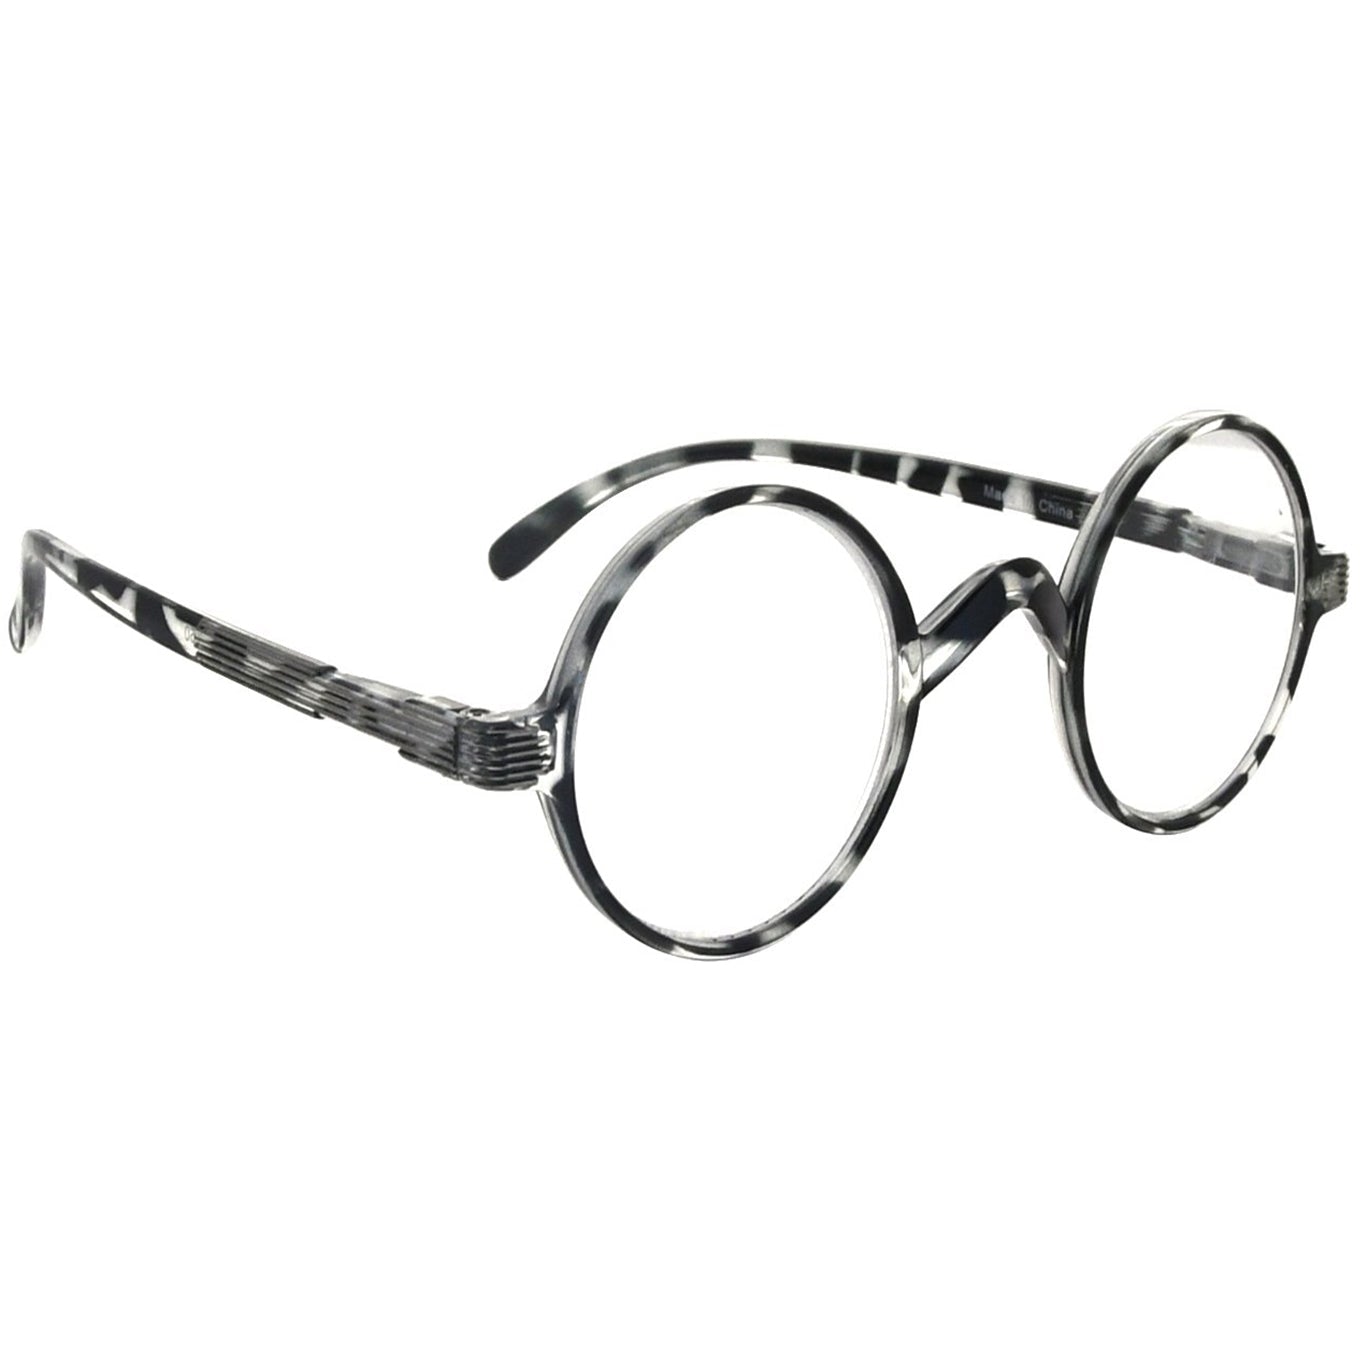 Round Reading Glasses Black White 5-R077B